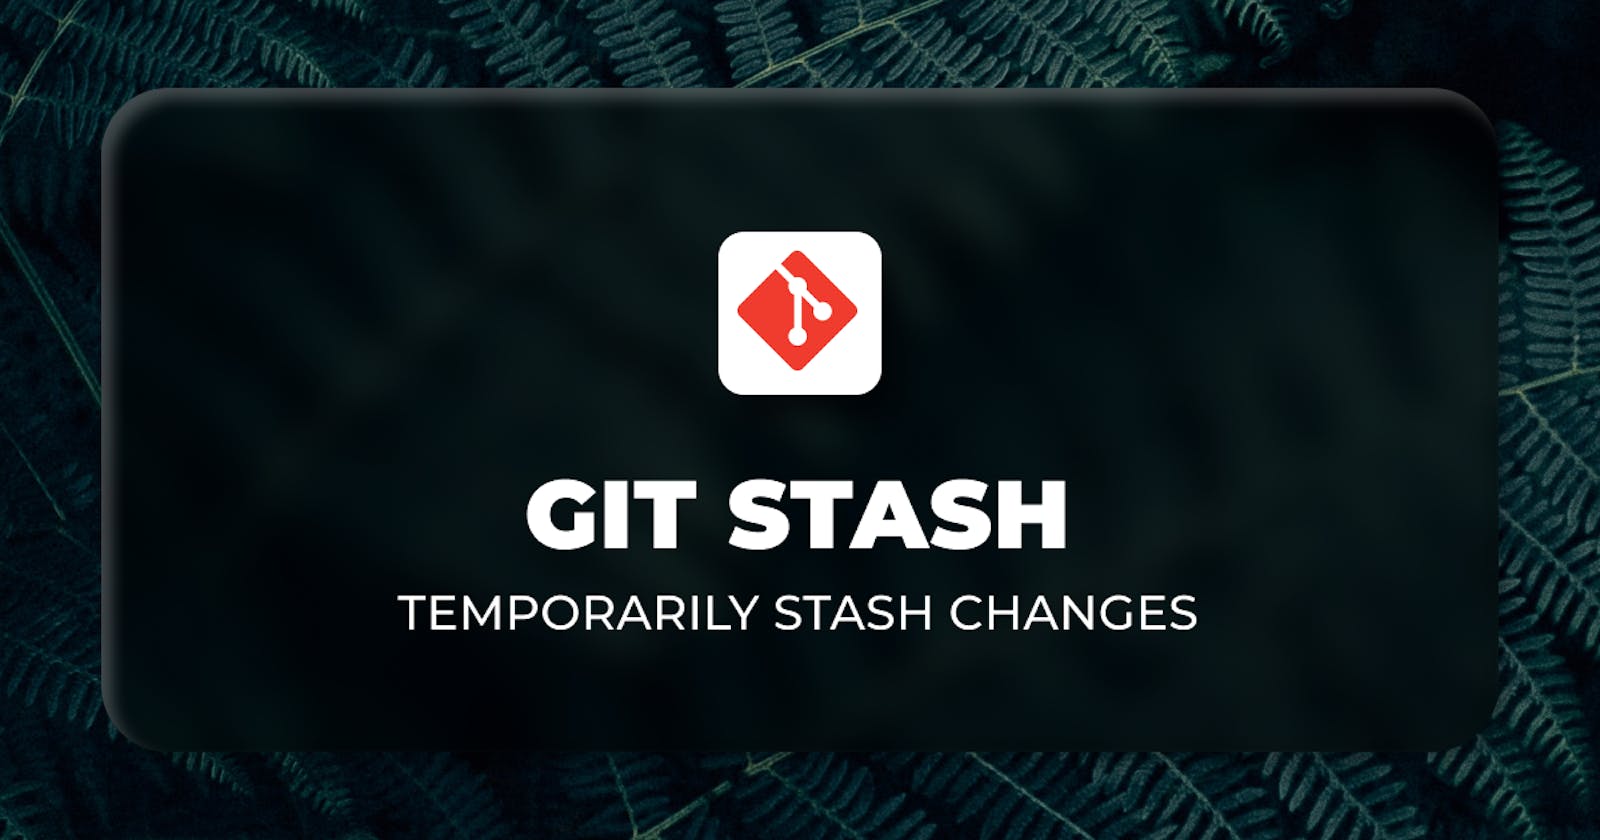 Git stash command